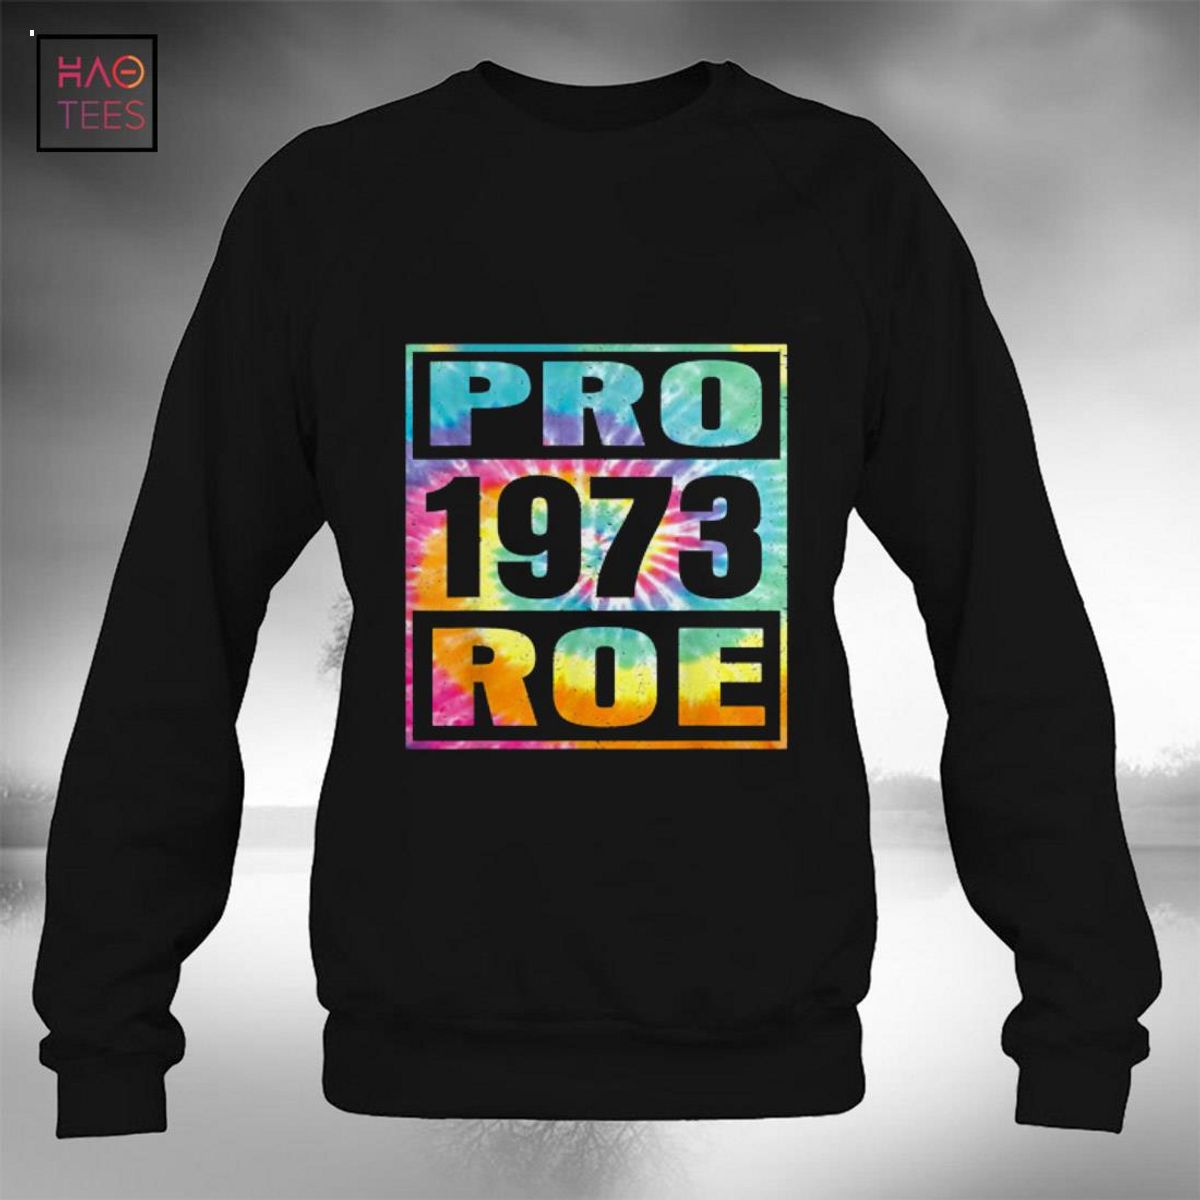 Tie Dye Pro Roe 1973 Pro Choice Women's Rights Shirt